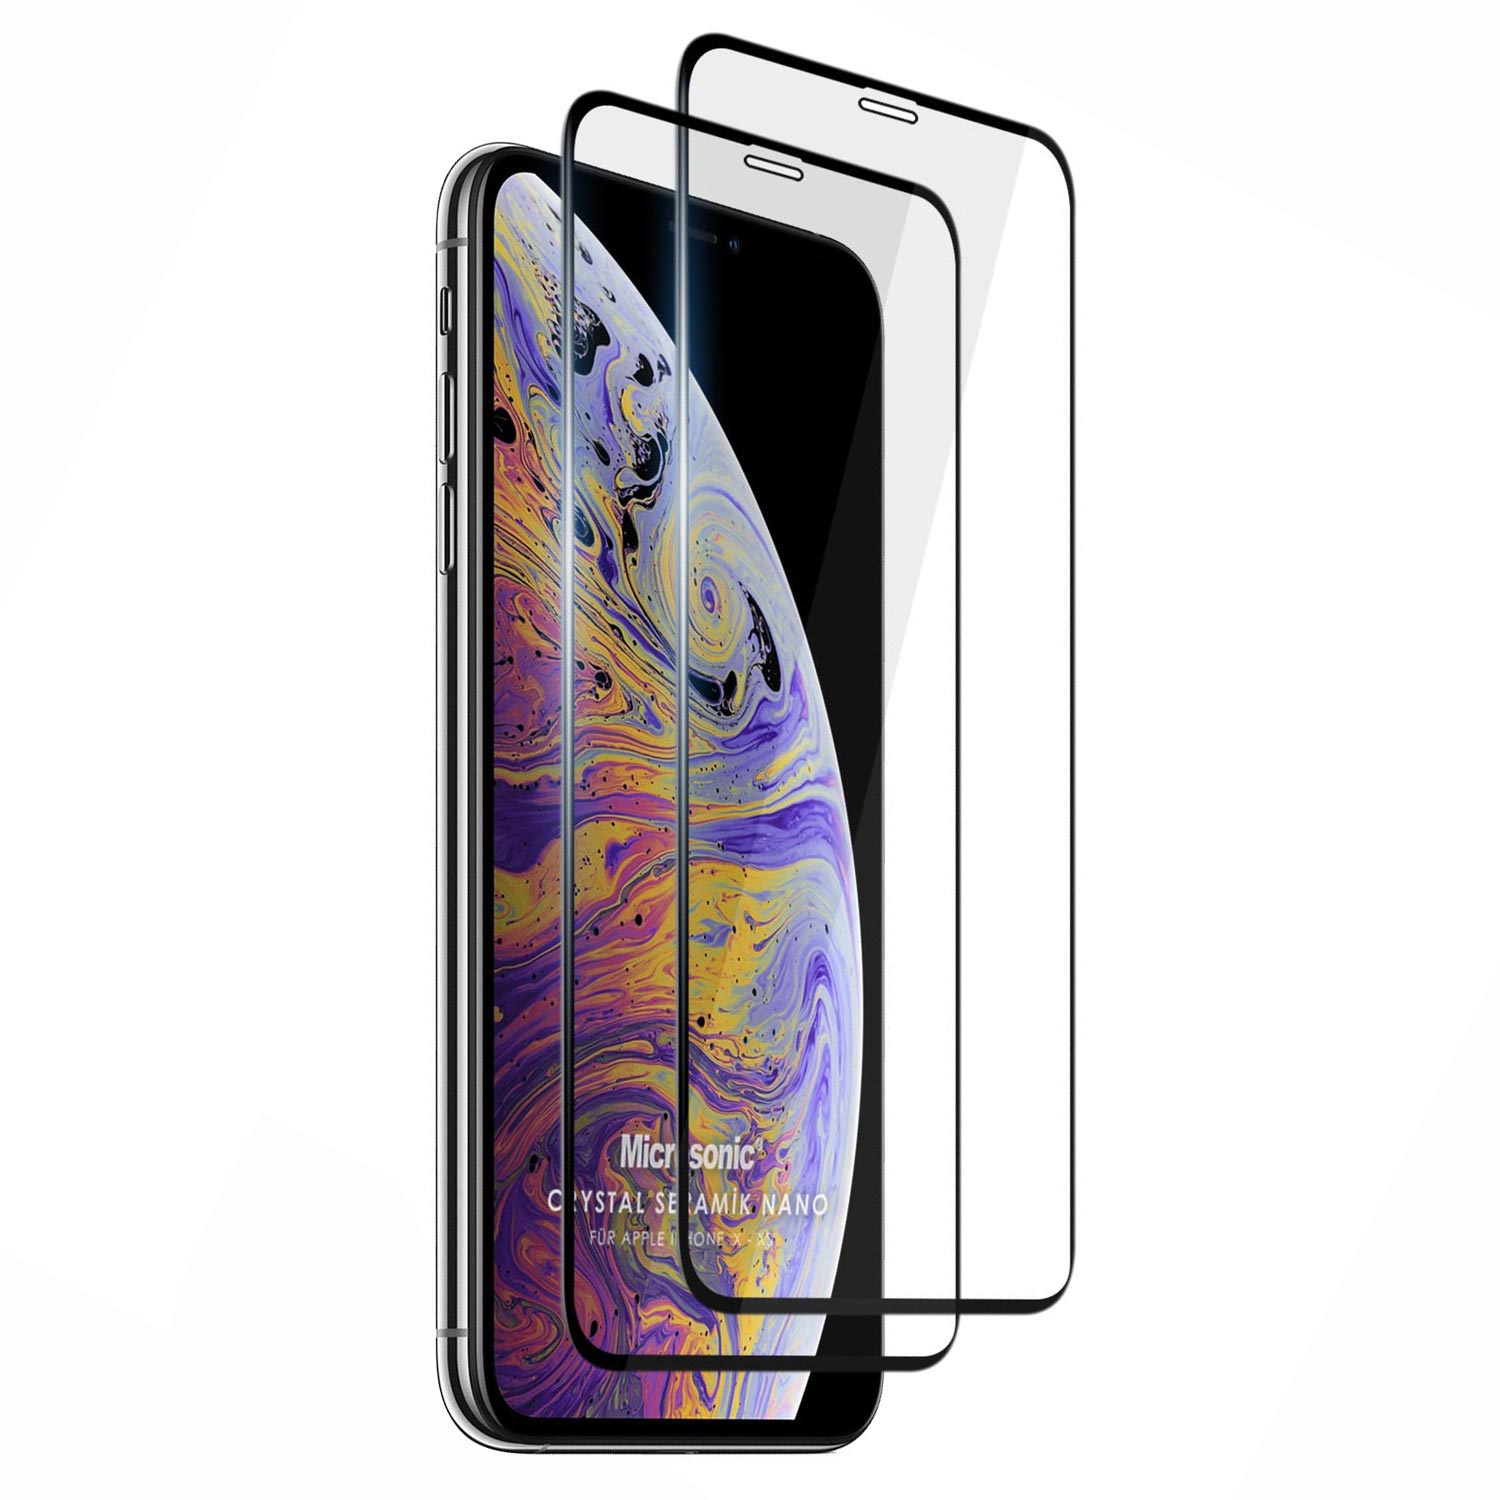 Microsonic Apple iPhone XS Crystal Seramik Nano Ekran Koruyucu Siyah 2 Adet